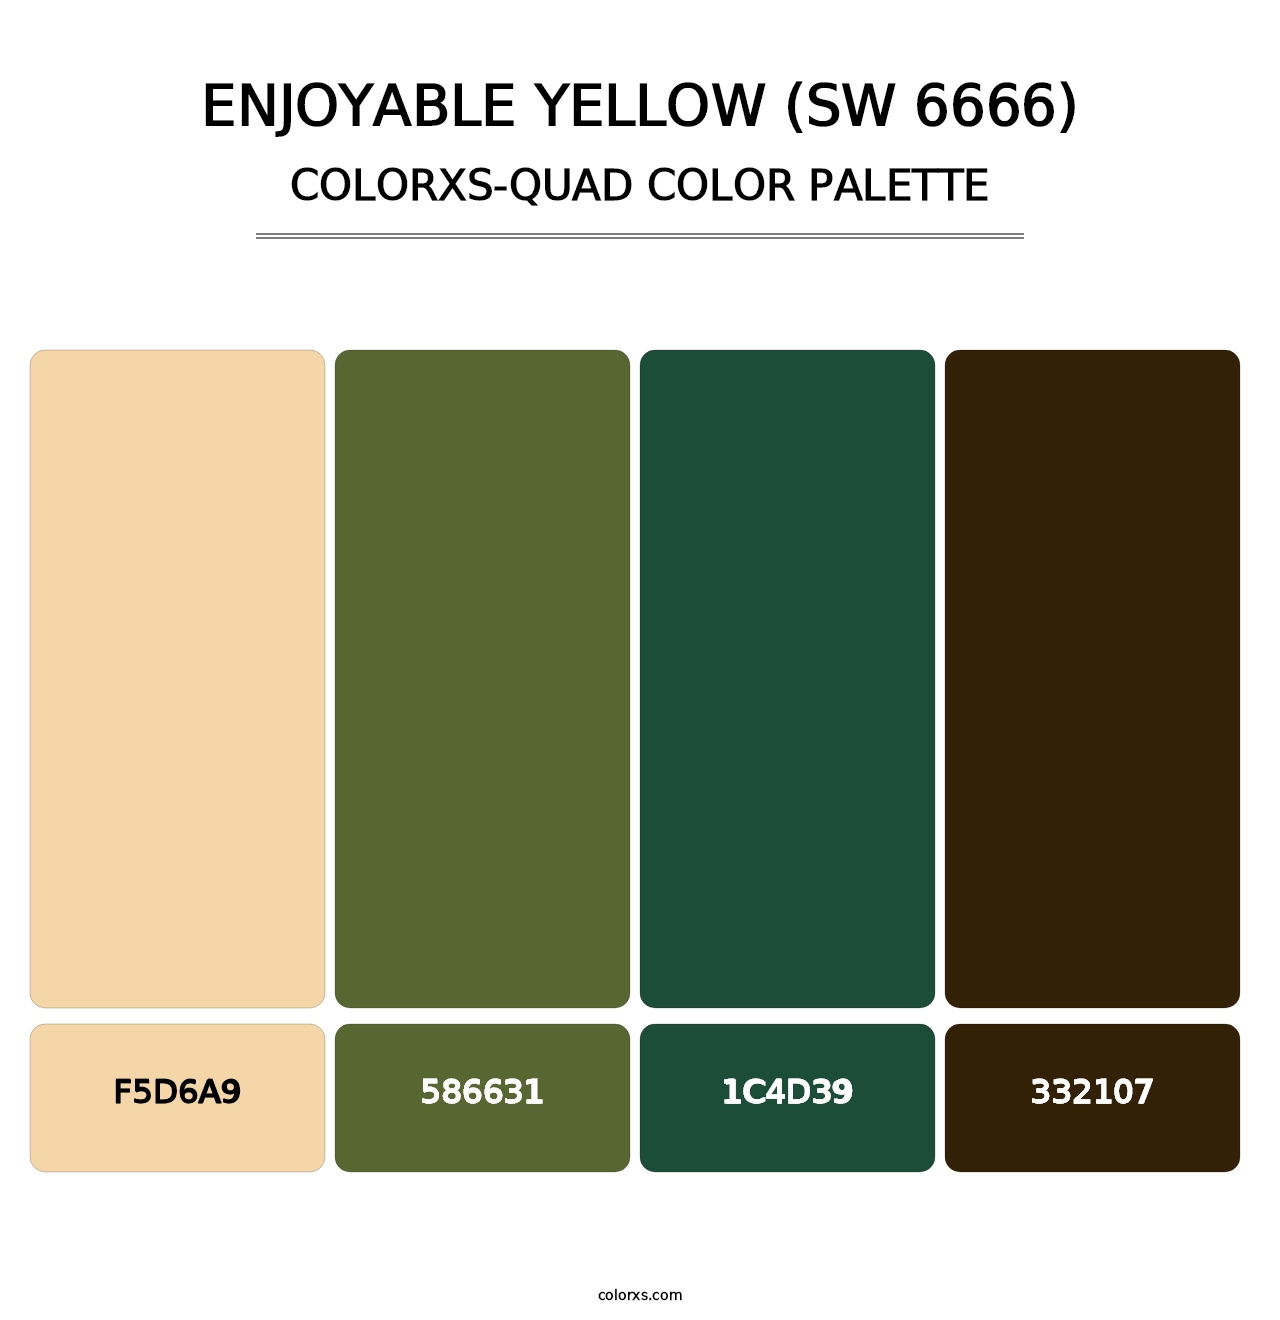 Enjoyable Yellow (SW 6666) - Colorxs Quad Palette